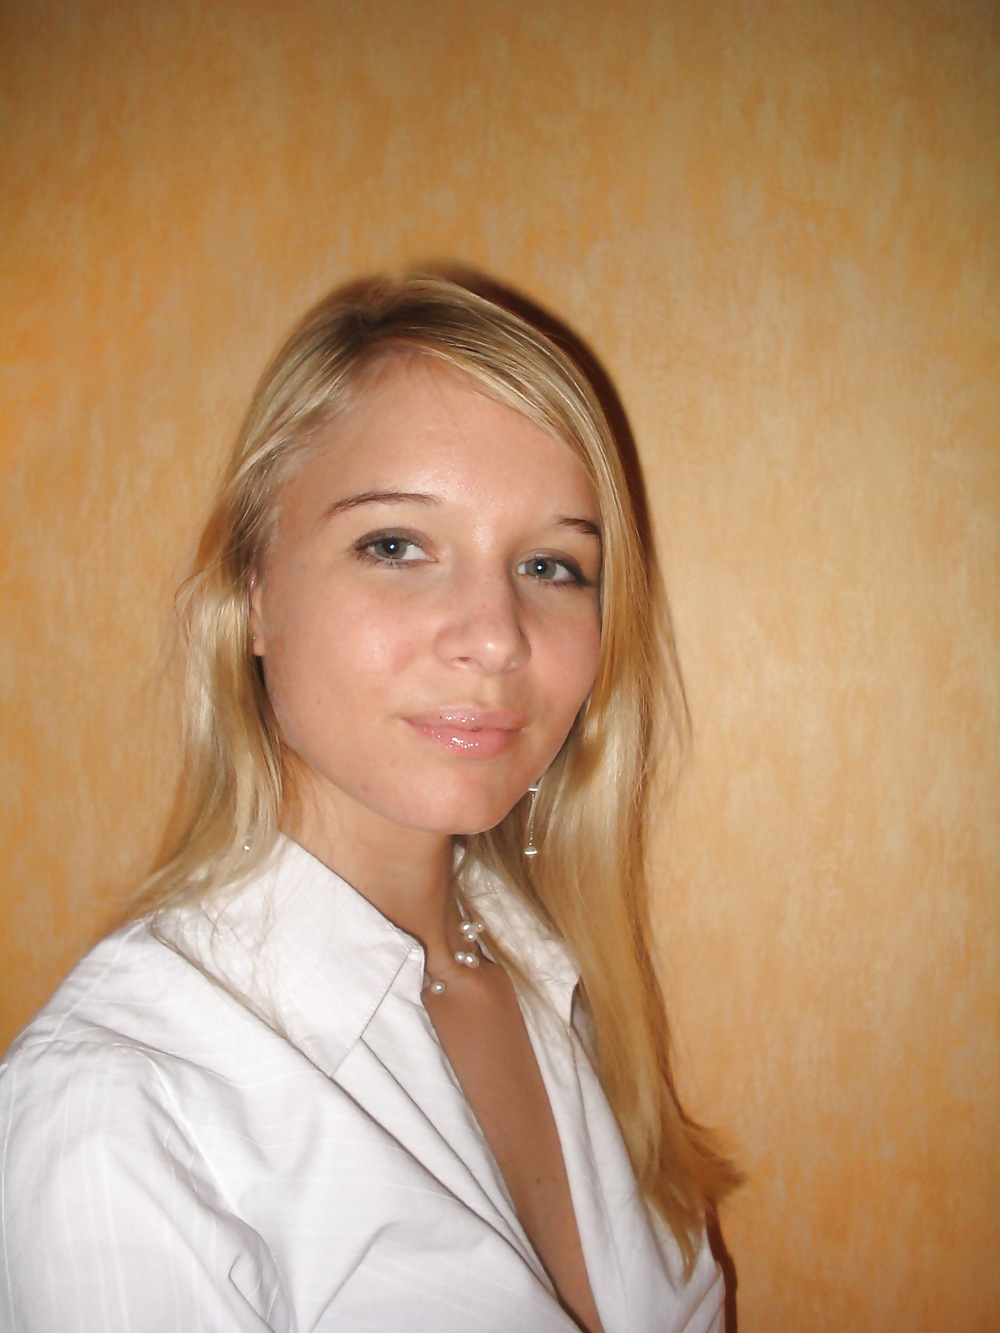 Sexy Blonde German Teen Poses In Lingerie #24813753